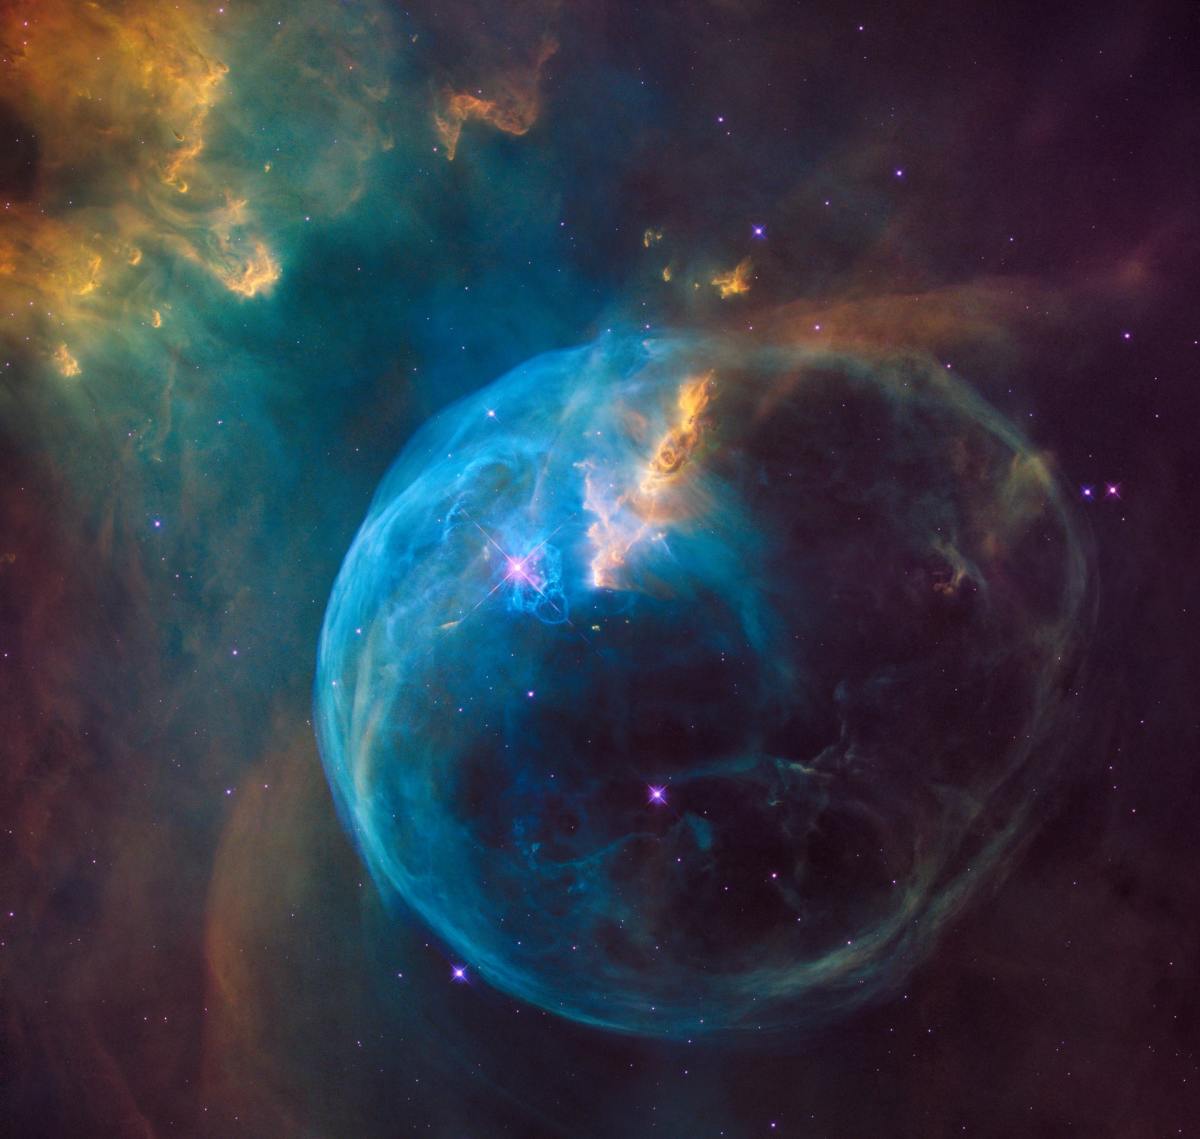 Stunning image of cat eye nebula taken by Hubble space telescope